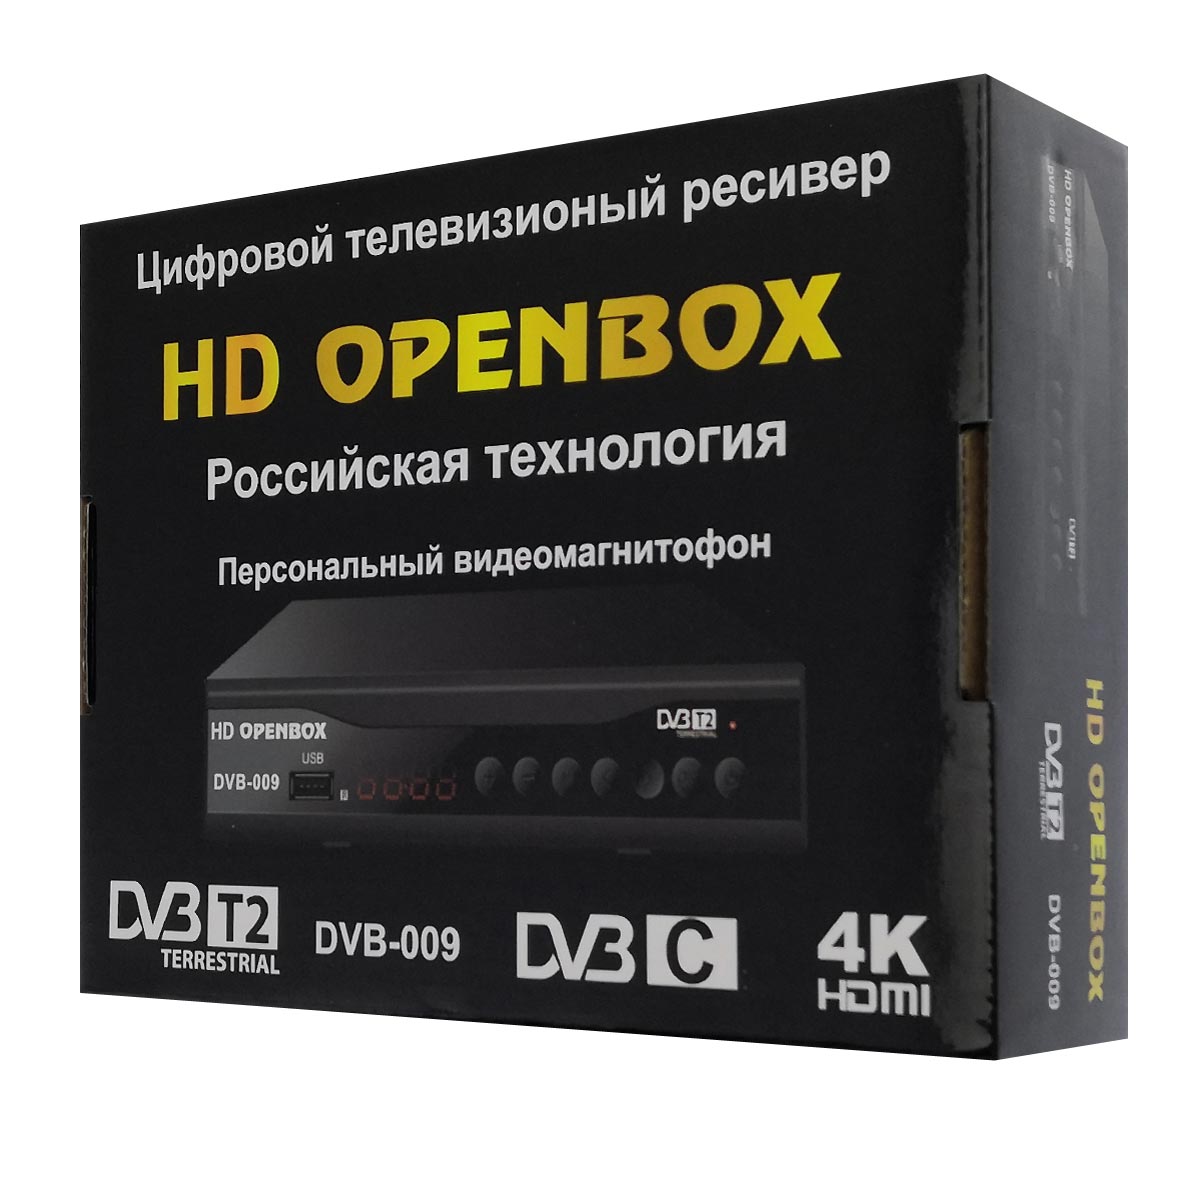 Цифровая приставка OPENBOX DVB-009, цвет черный